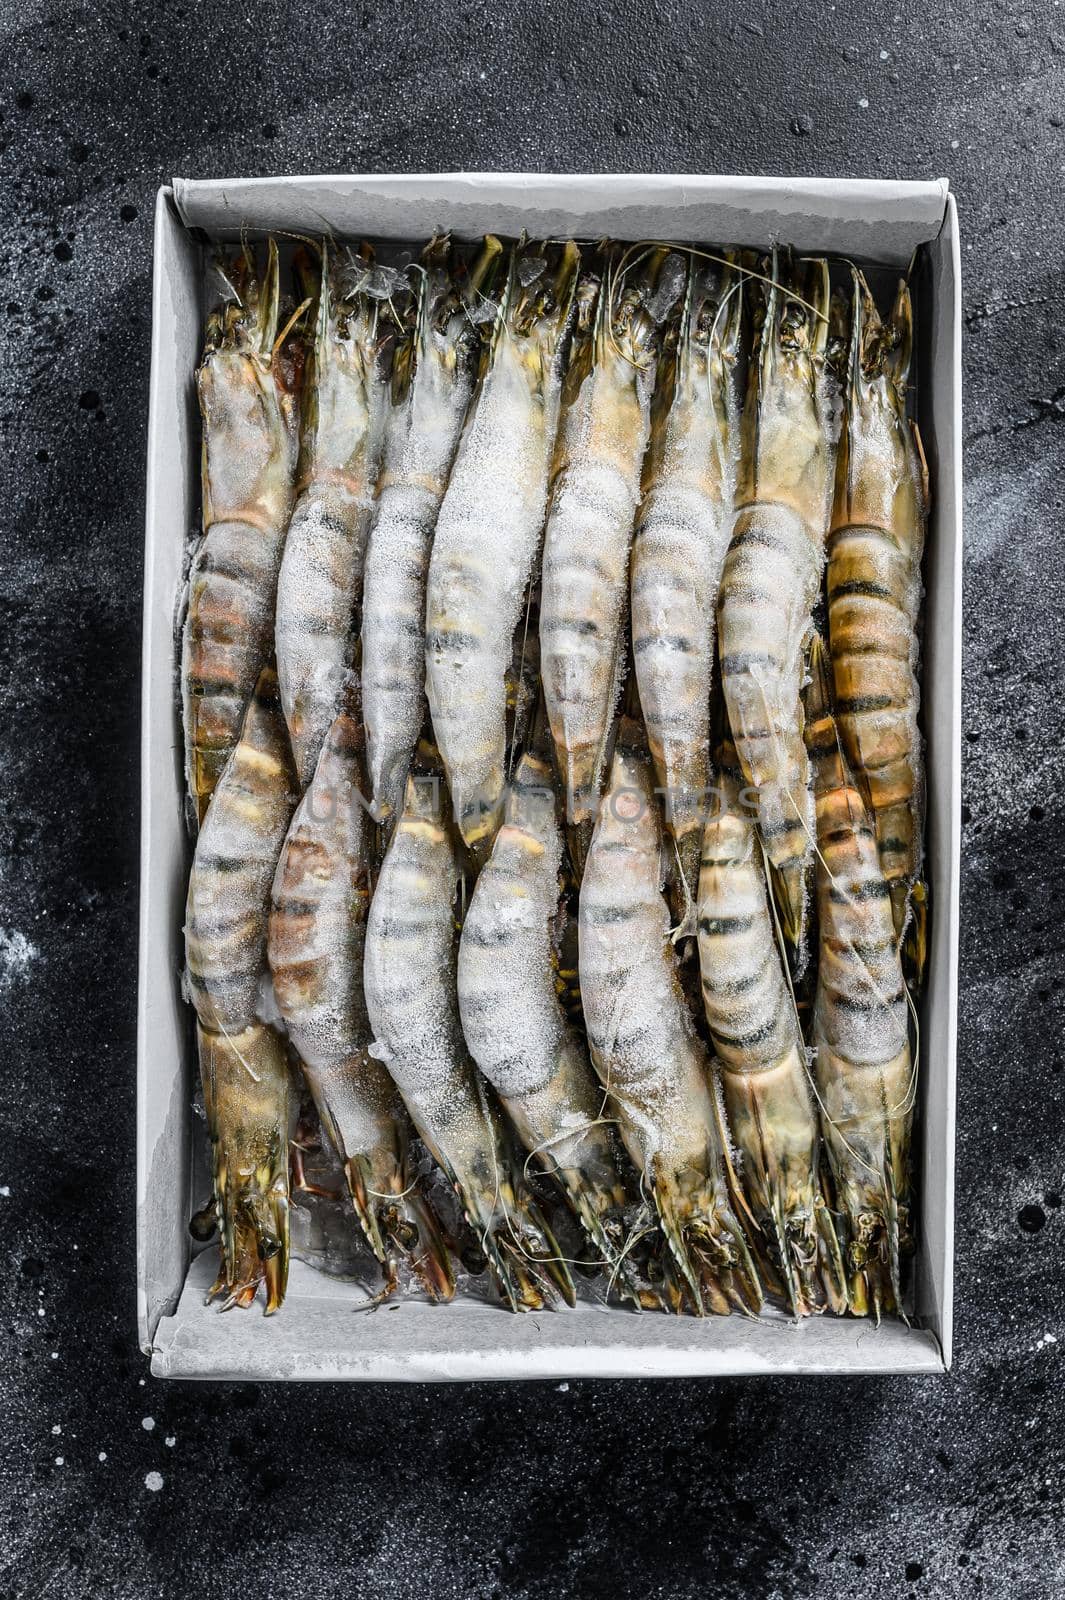 Package of frozen tiger prawns, shrimps. Black background. Top view.